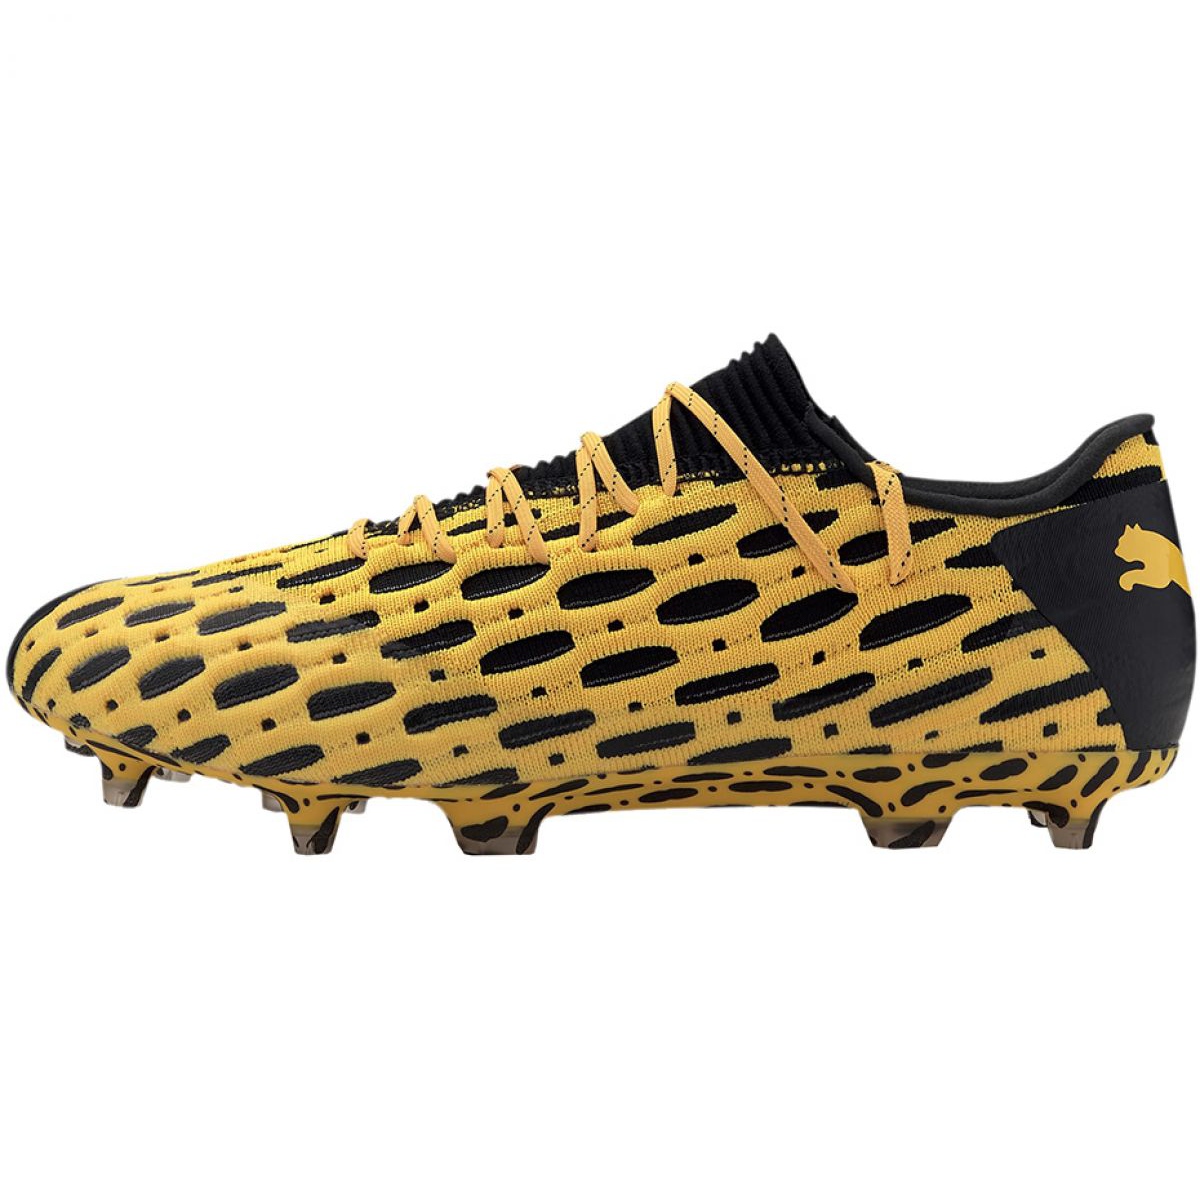 Buty piłkarskie Puma Future 5.1 Netfit Low Fg Ag M 105791 02 żółte żółte